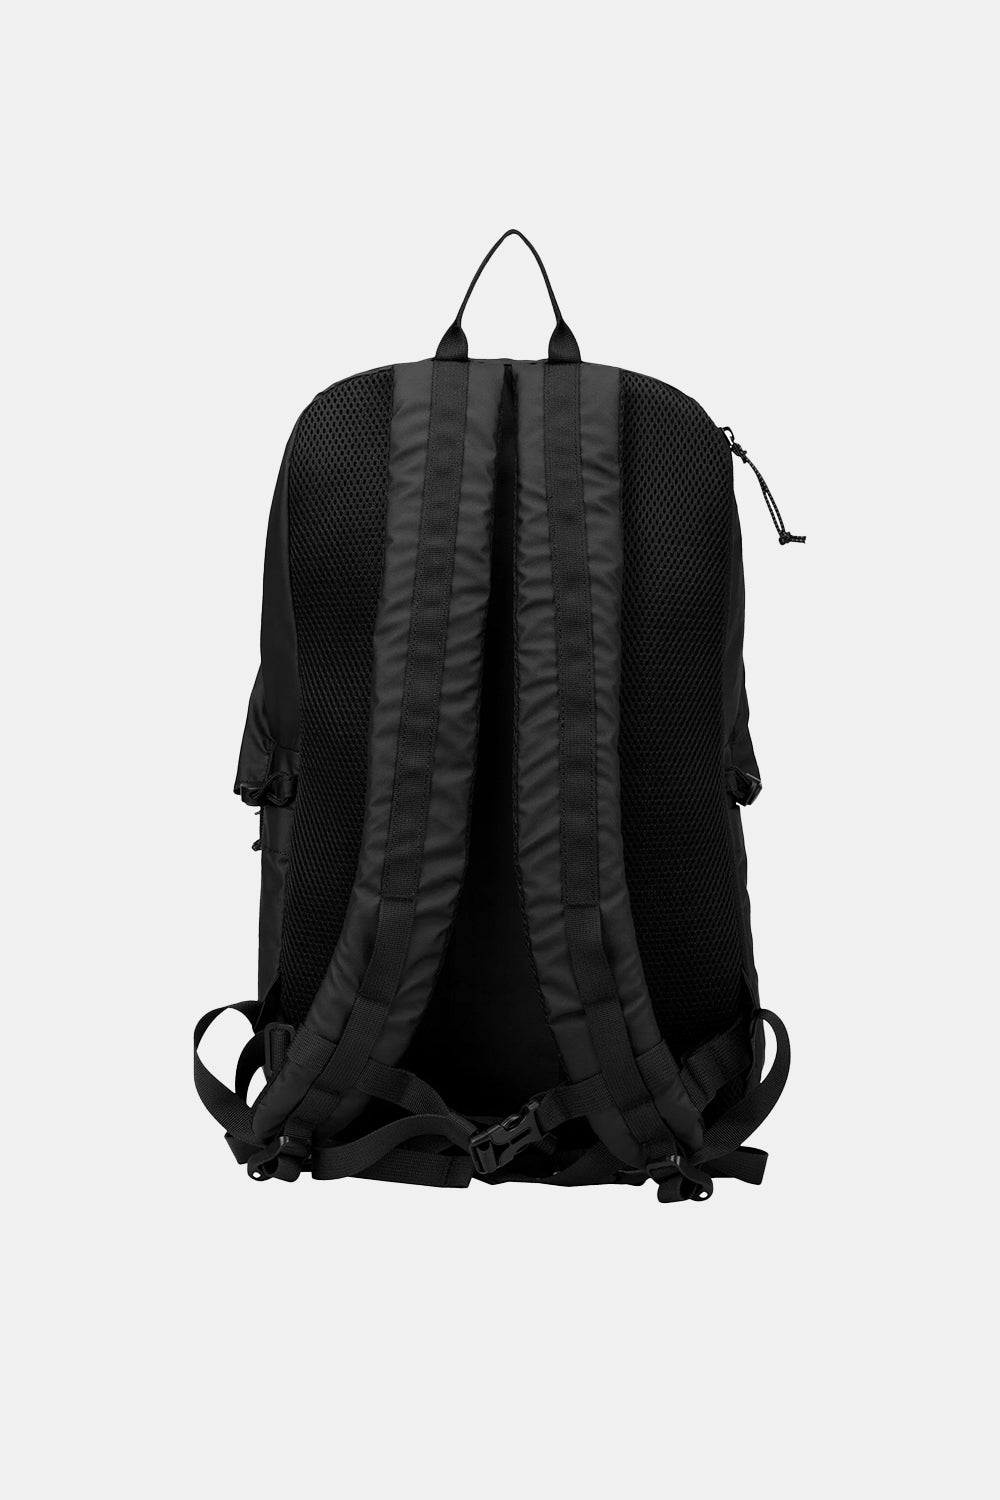 Elliker Kiln Hooded Zip Top Backpack 22L (Black)
